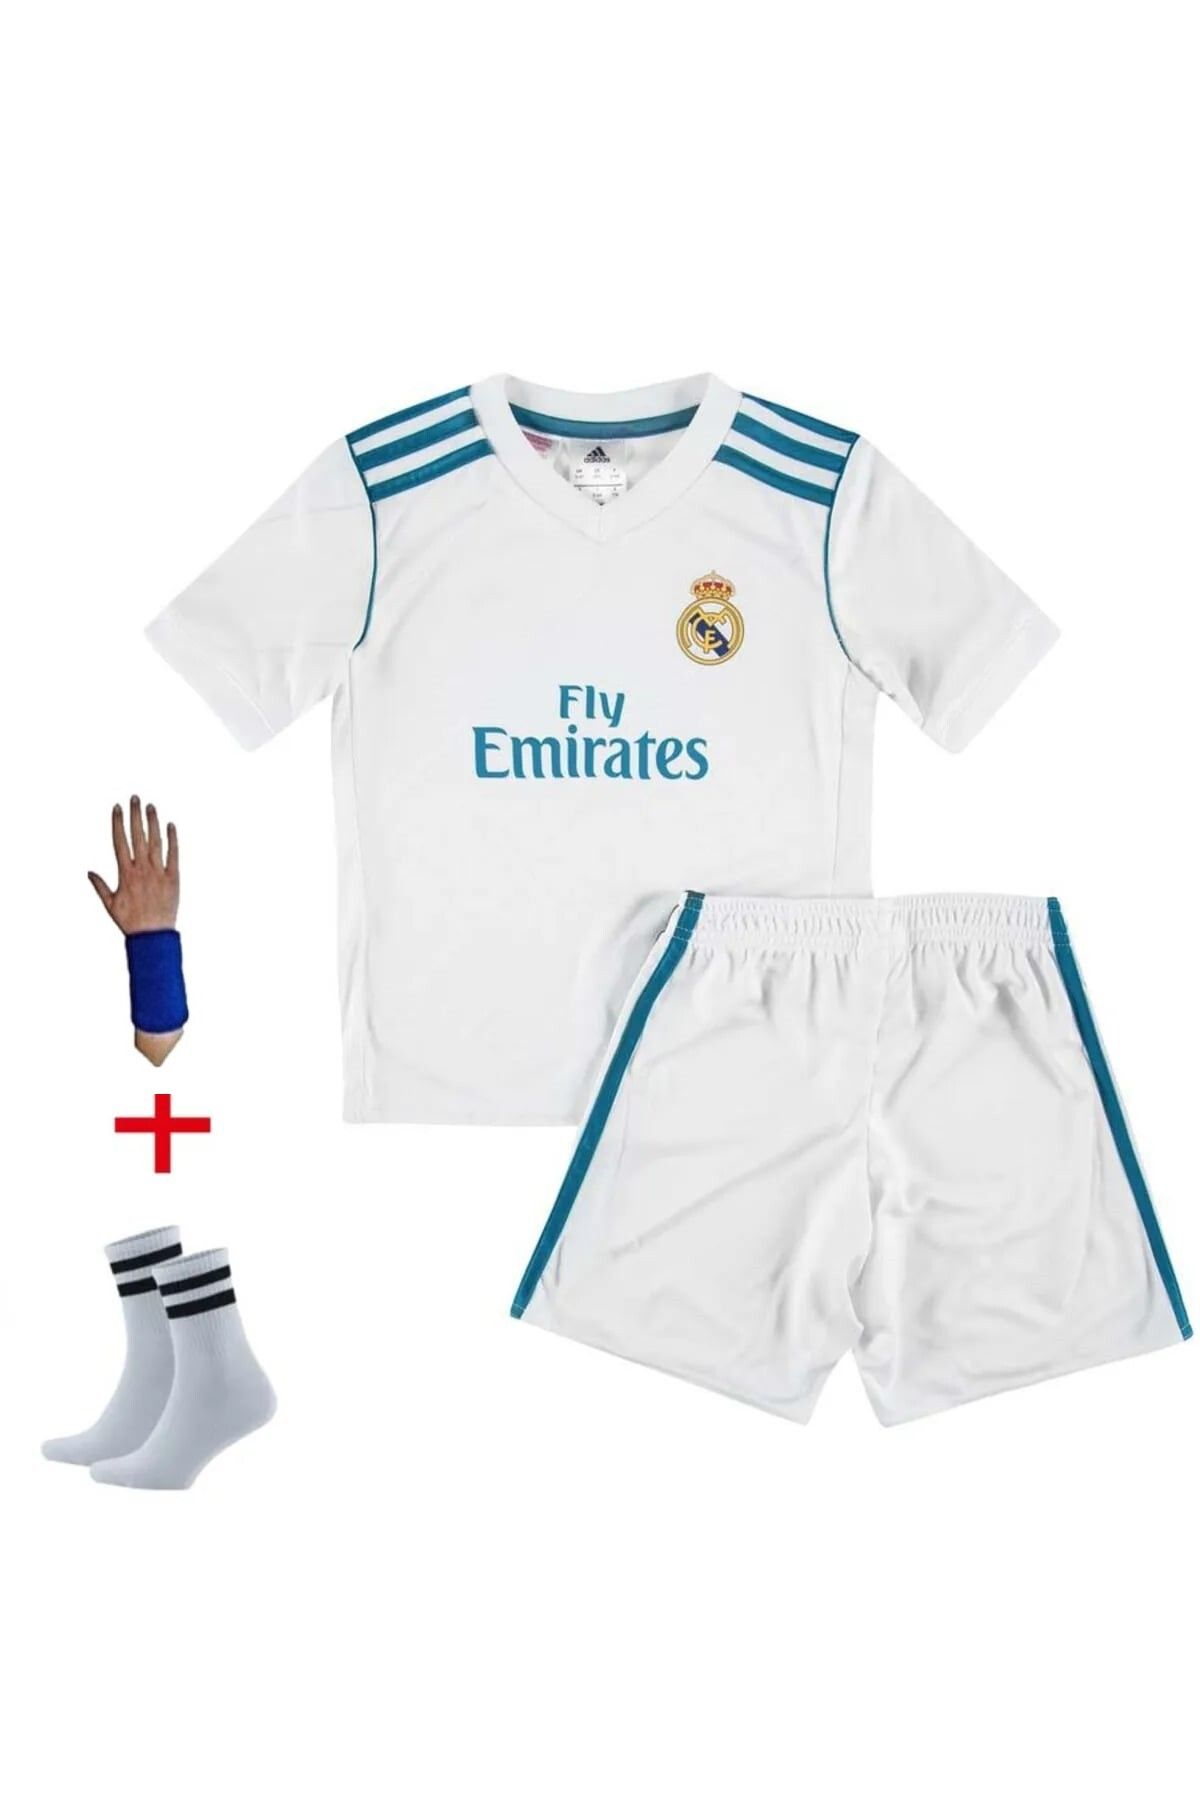 yenteks Sergio Ramos 2018 Real Madrid Beyaz 4 Lü Set Çocuk Futbol Forması Retro Forma